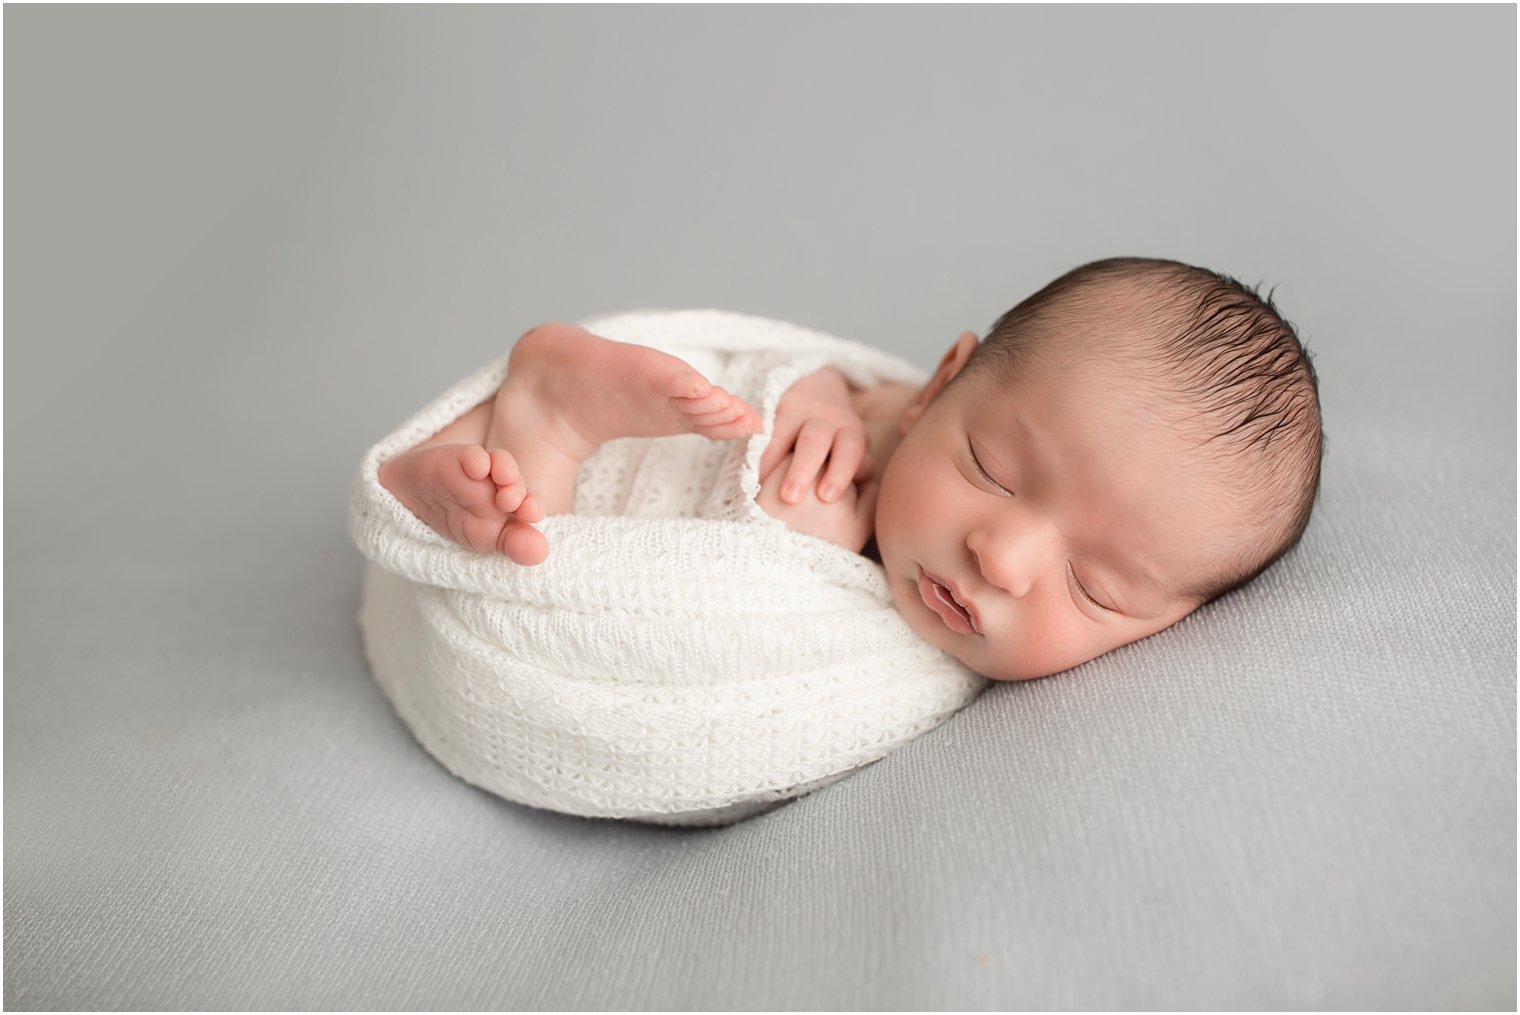 Newborn boy on gray blanket